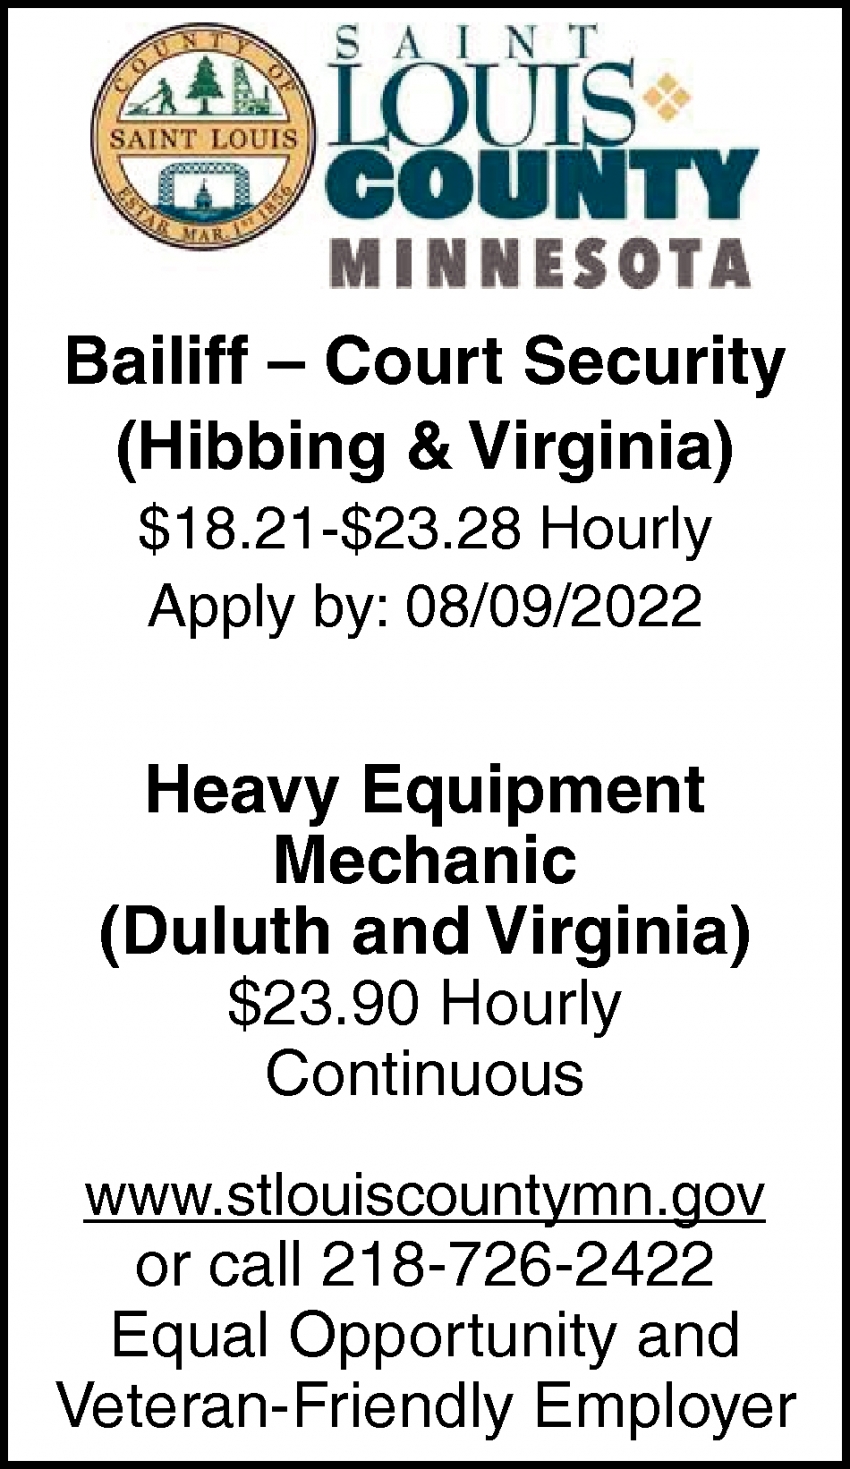 Bailiff - Court Security, Heavy Equipment Mechanic